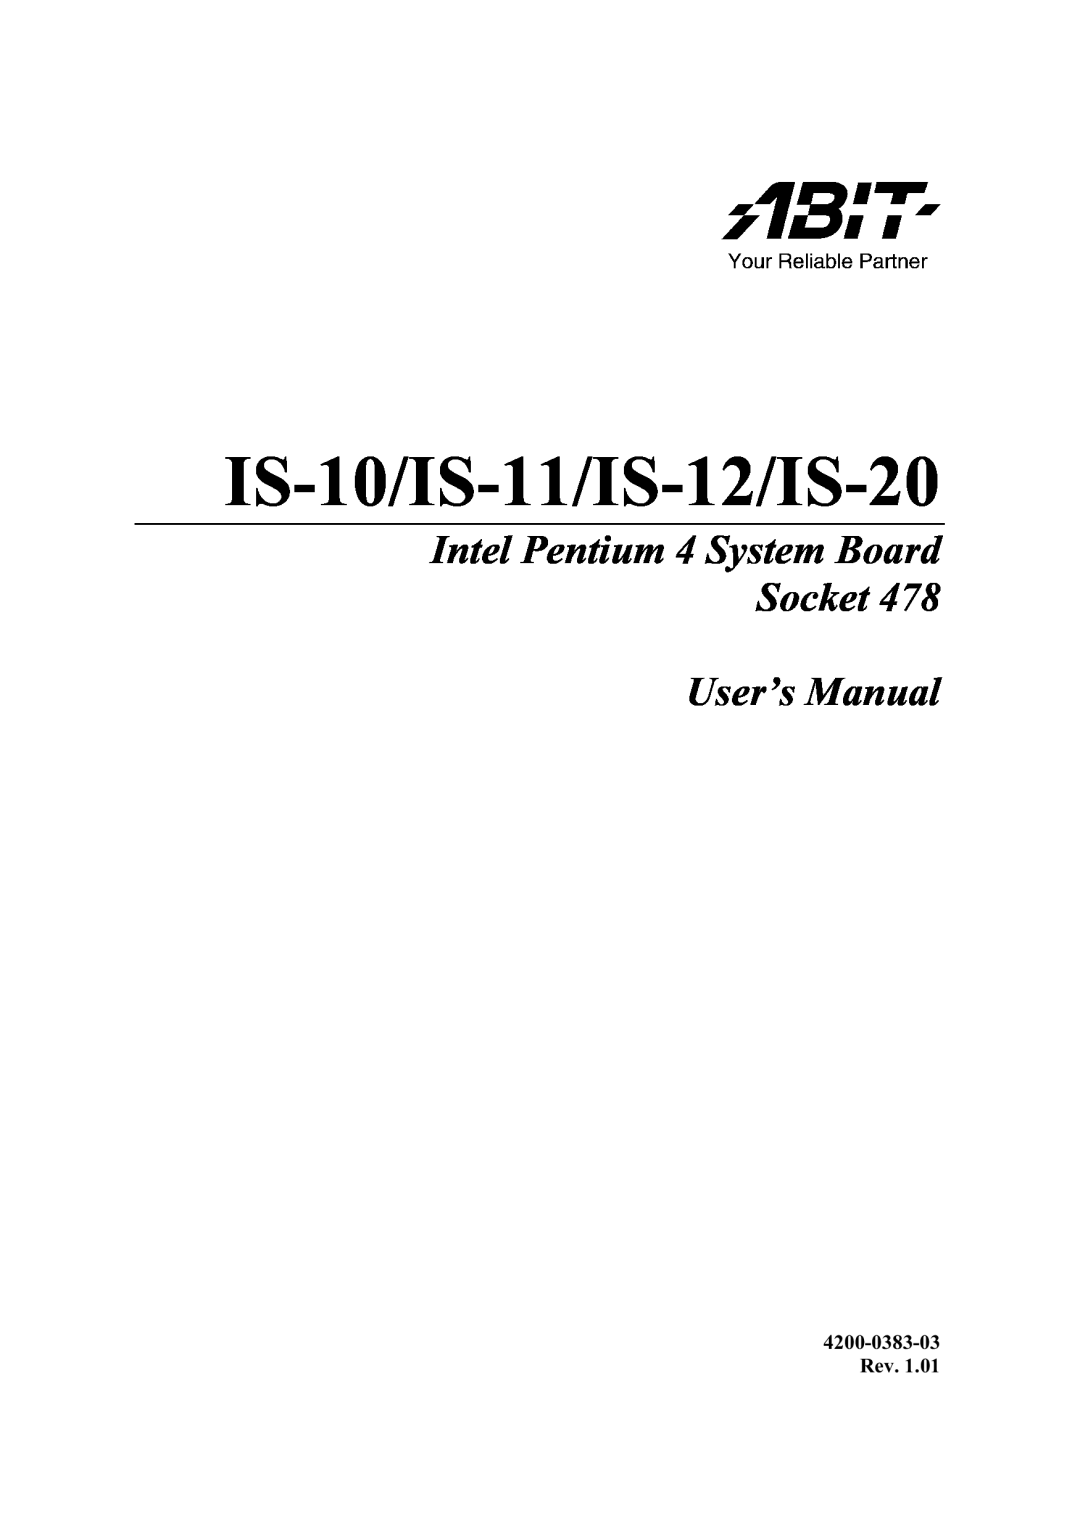 Abit user manual IS-10/IS-11/IS-12/IS-20, Intel Pentium 4 System Board Socket User’s Manual, 4200-0383-03 Rev 